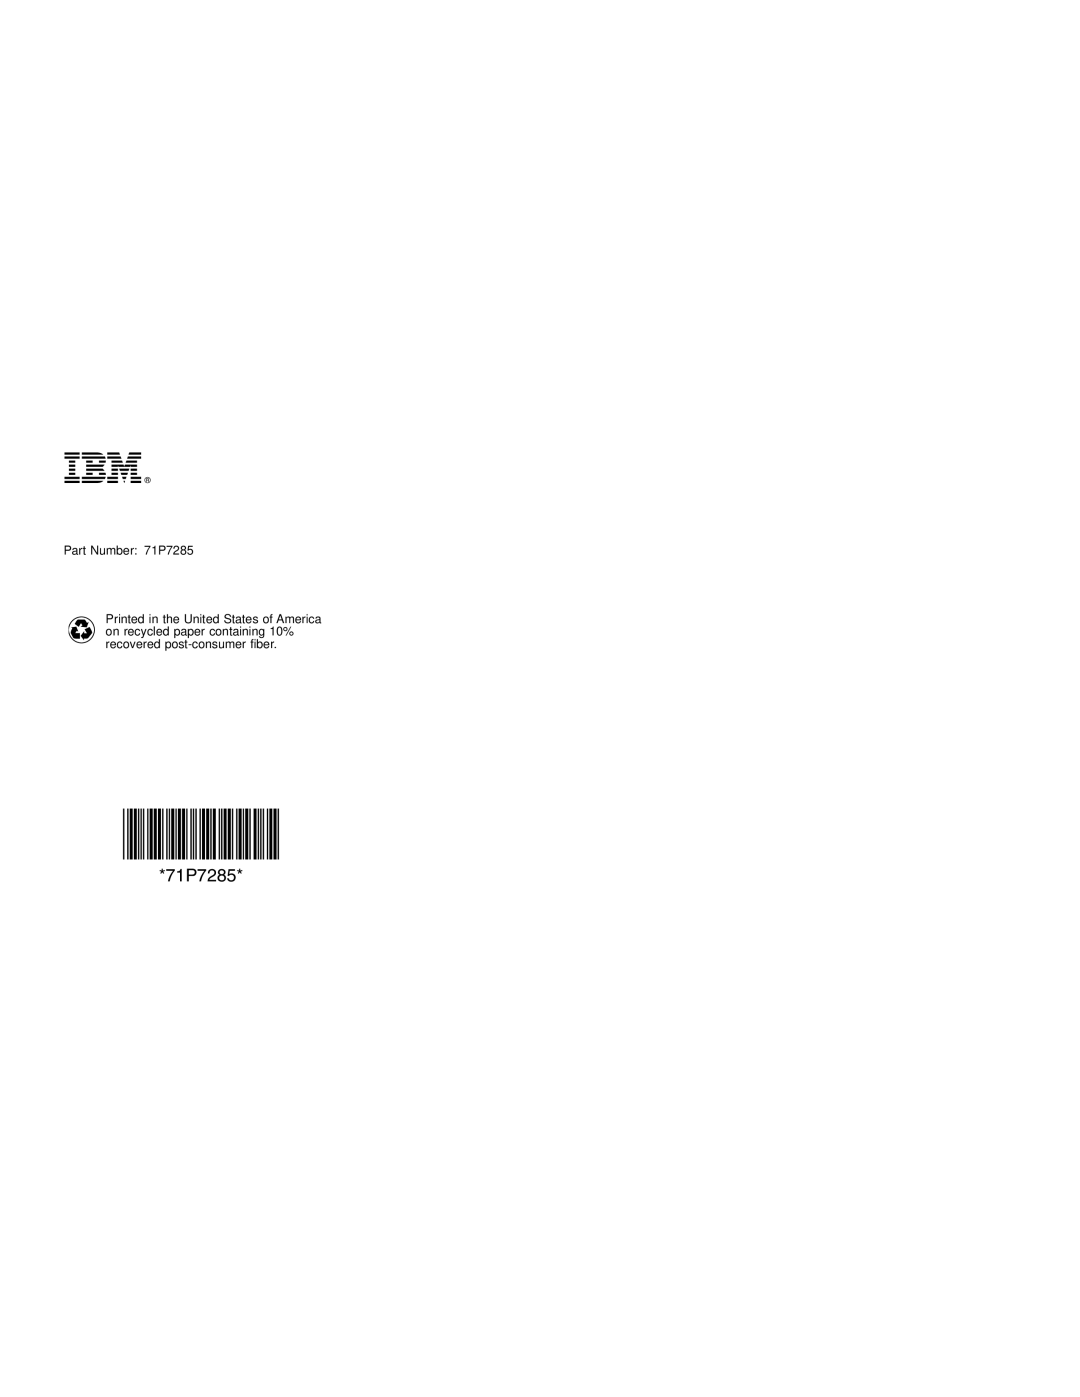 IBM manual Ibmr, Part Number 71P7285 